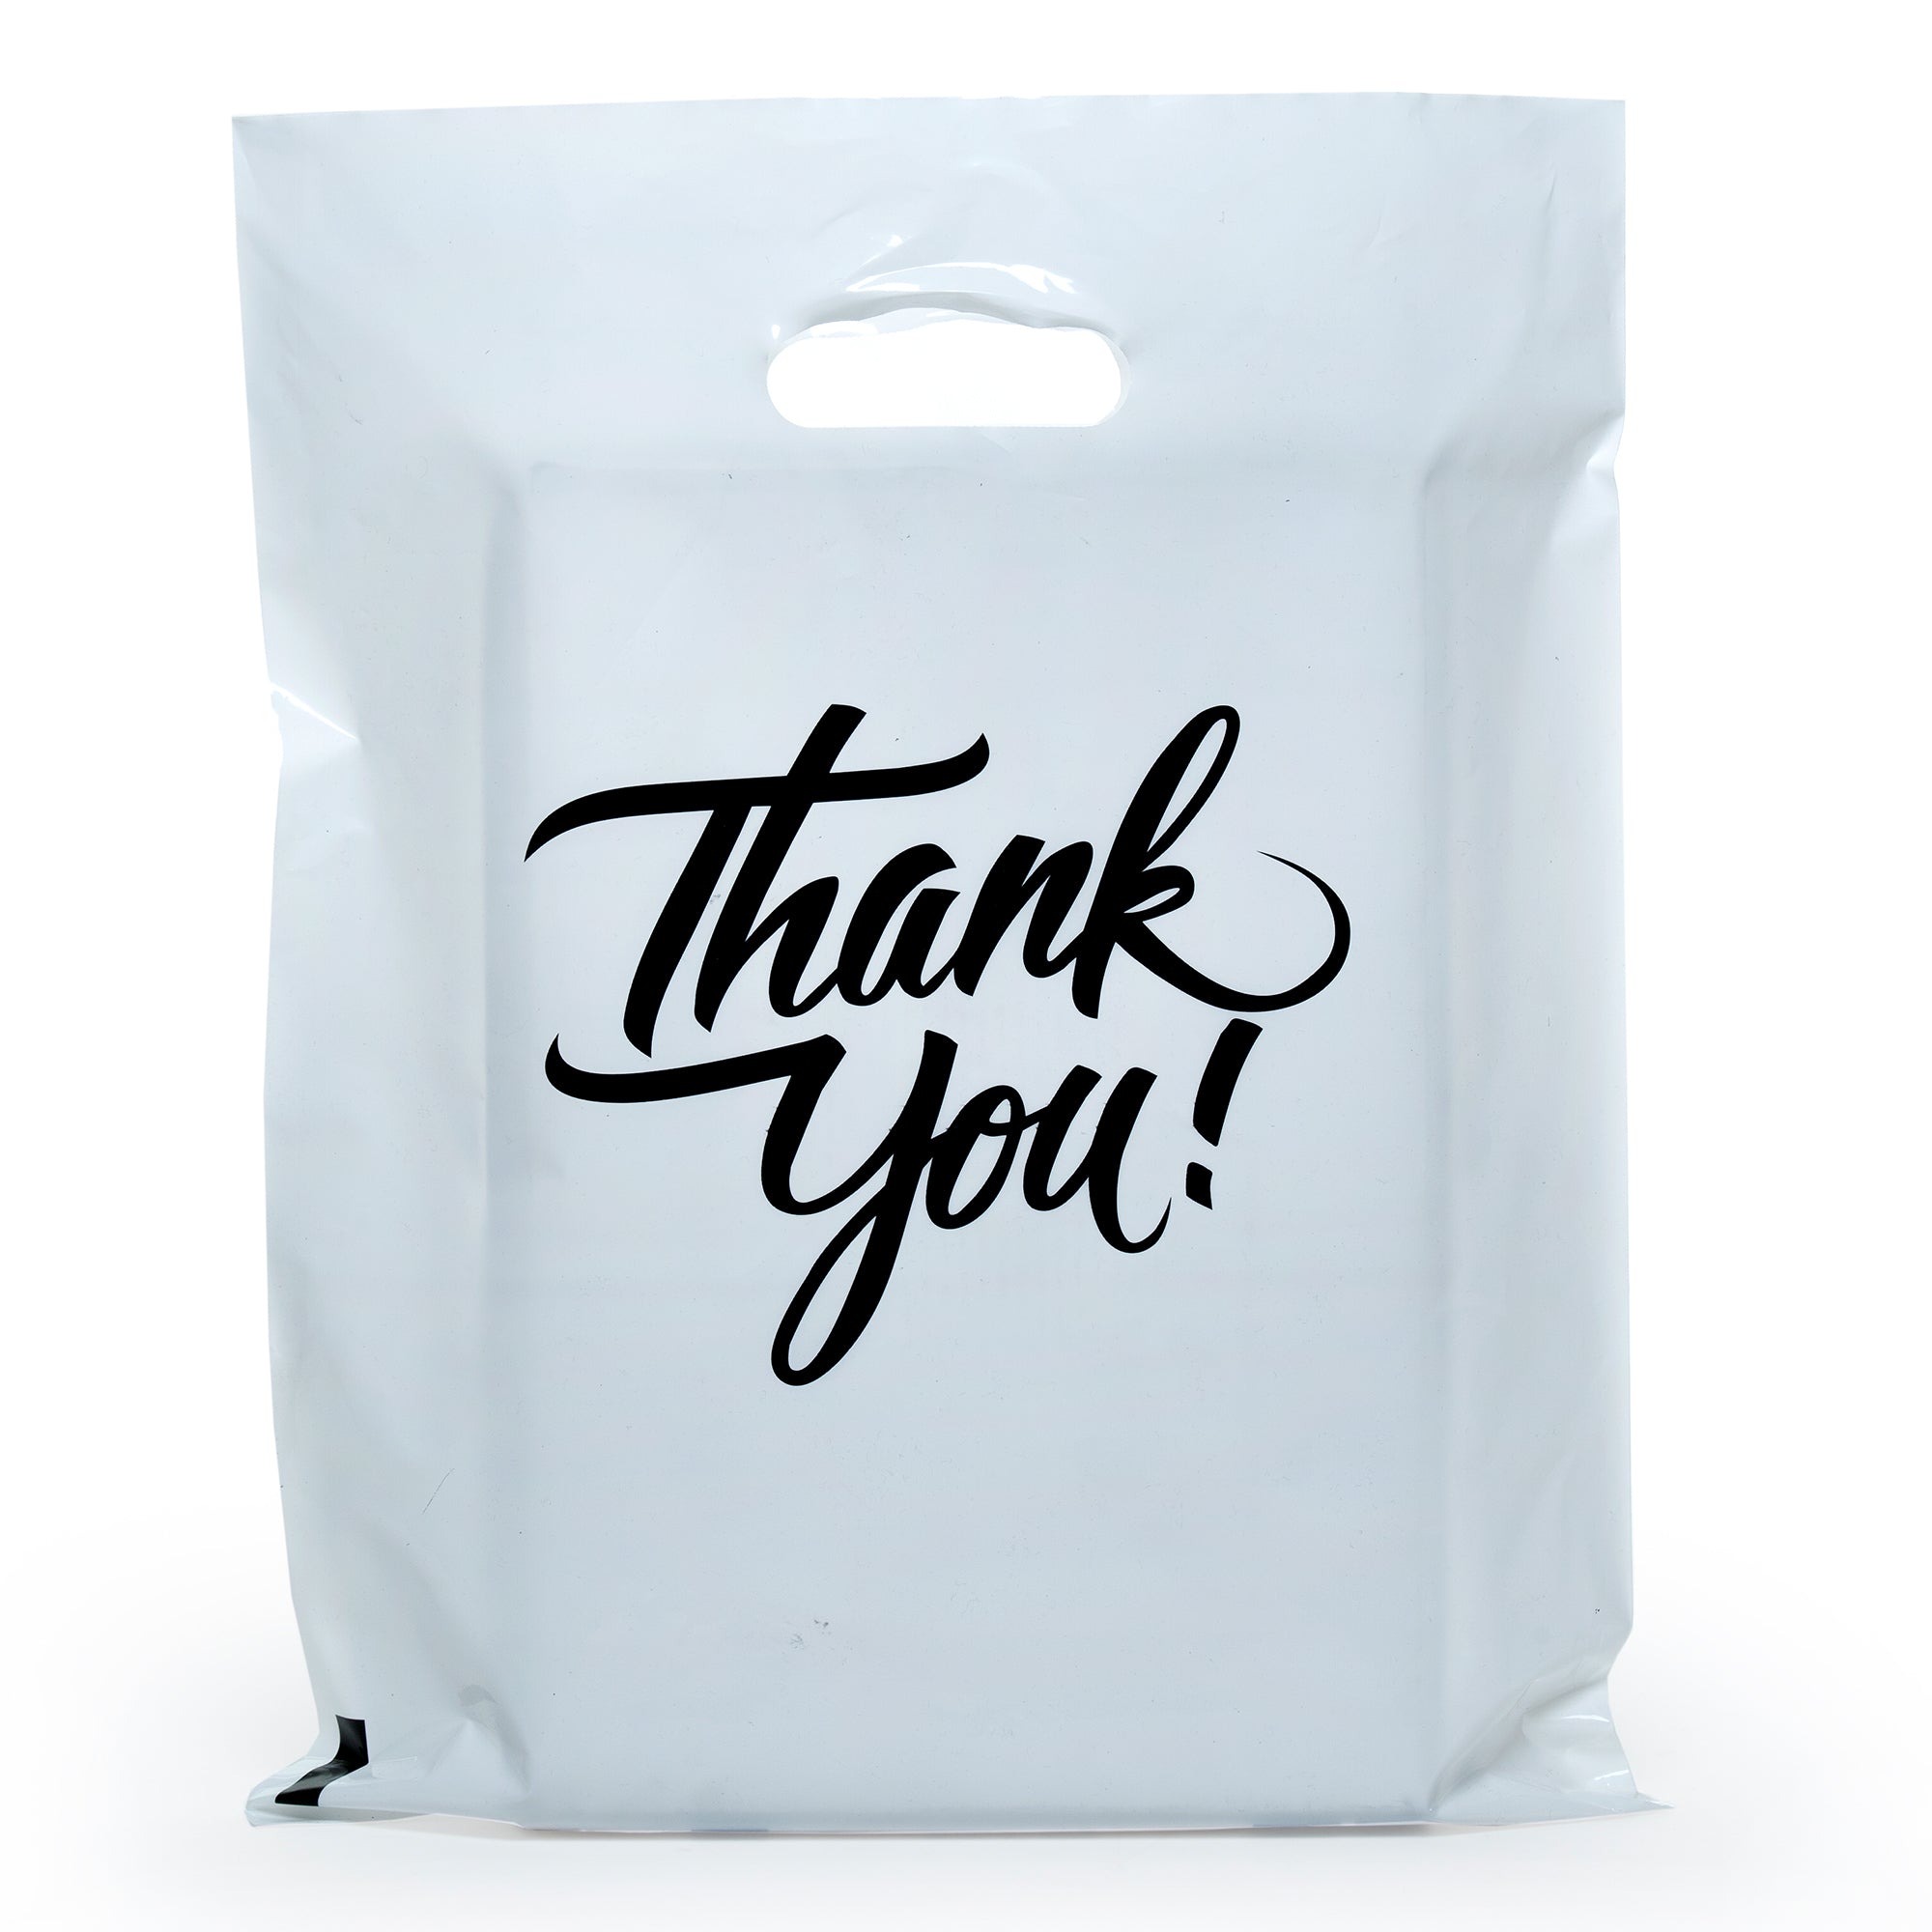 12x 15 Pack of 100 Thank You Printed Merchandise Bags 2.35 Mil With Die Cut Handle - Infinite Pack